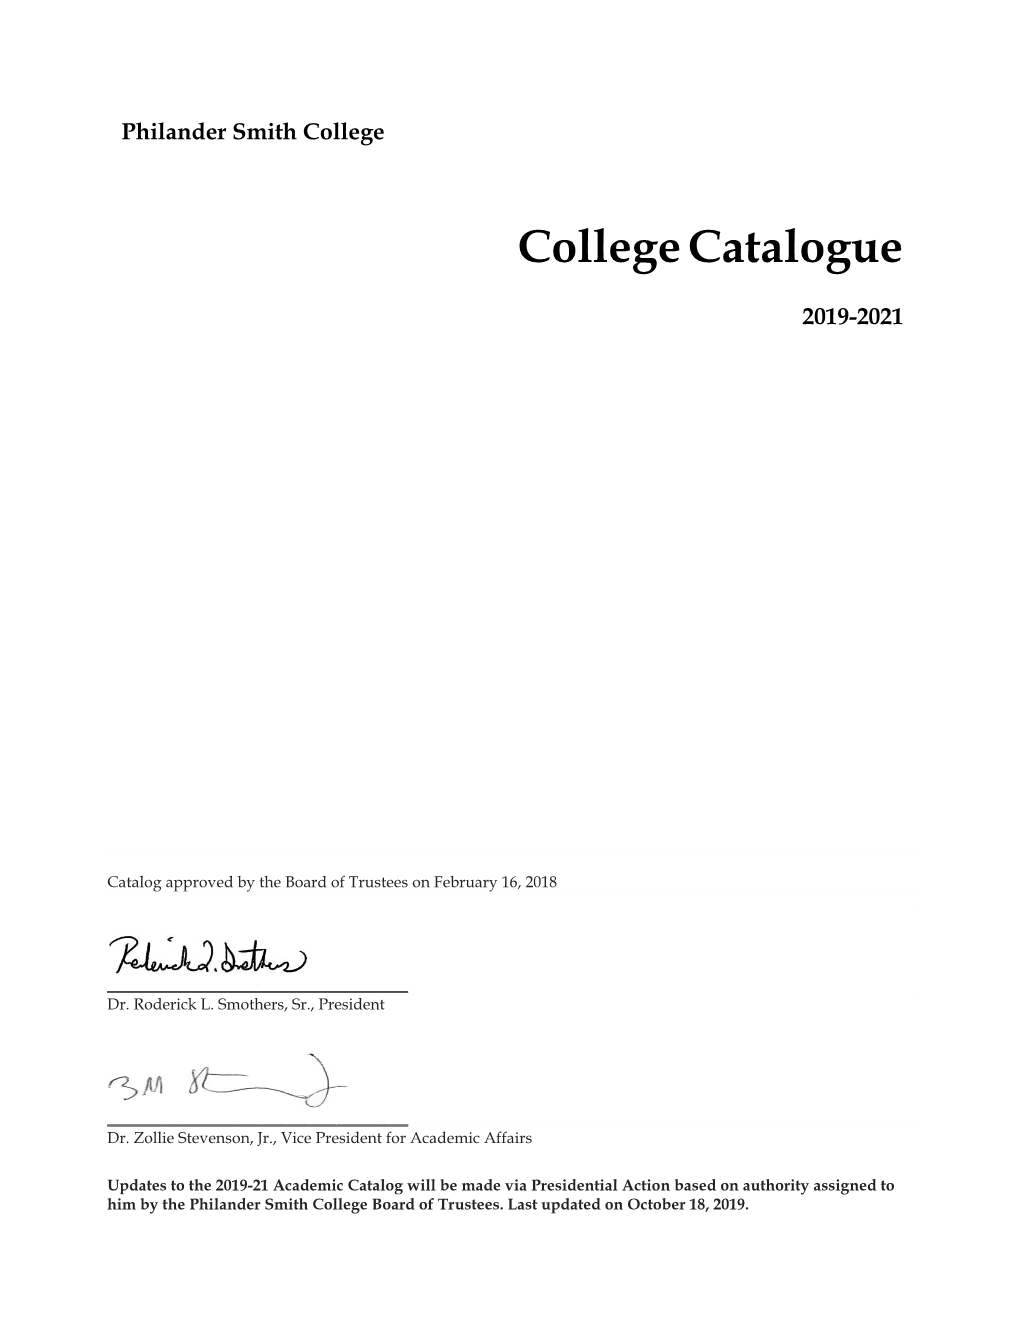 College Catalogue